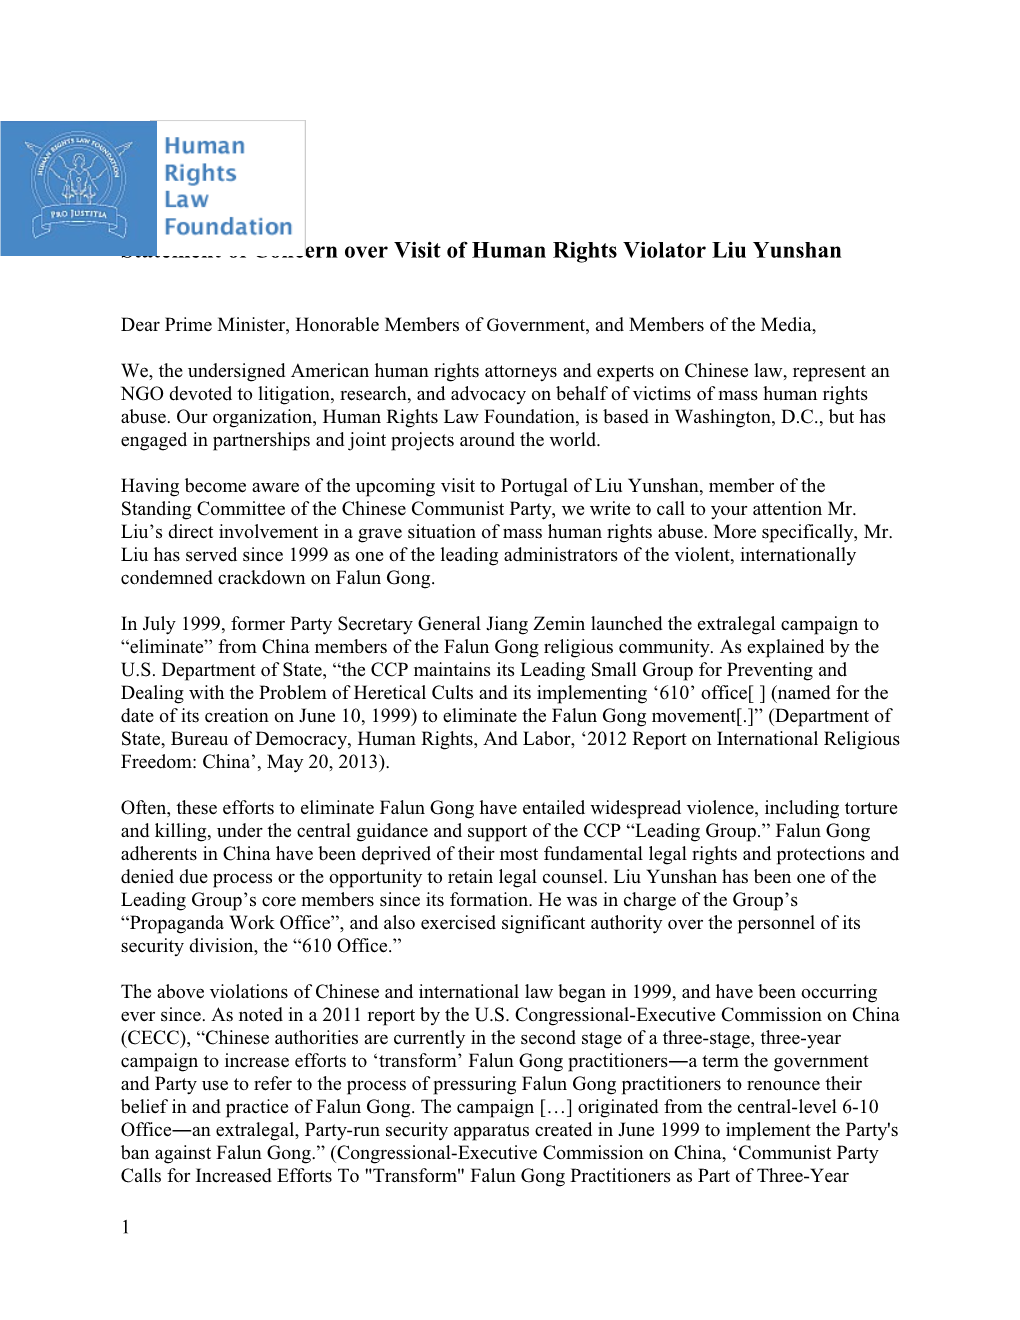 Statement of Concern Over Visit of Human Rights Violator Liu Yunshan